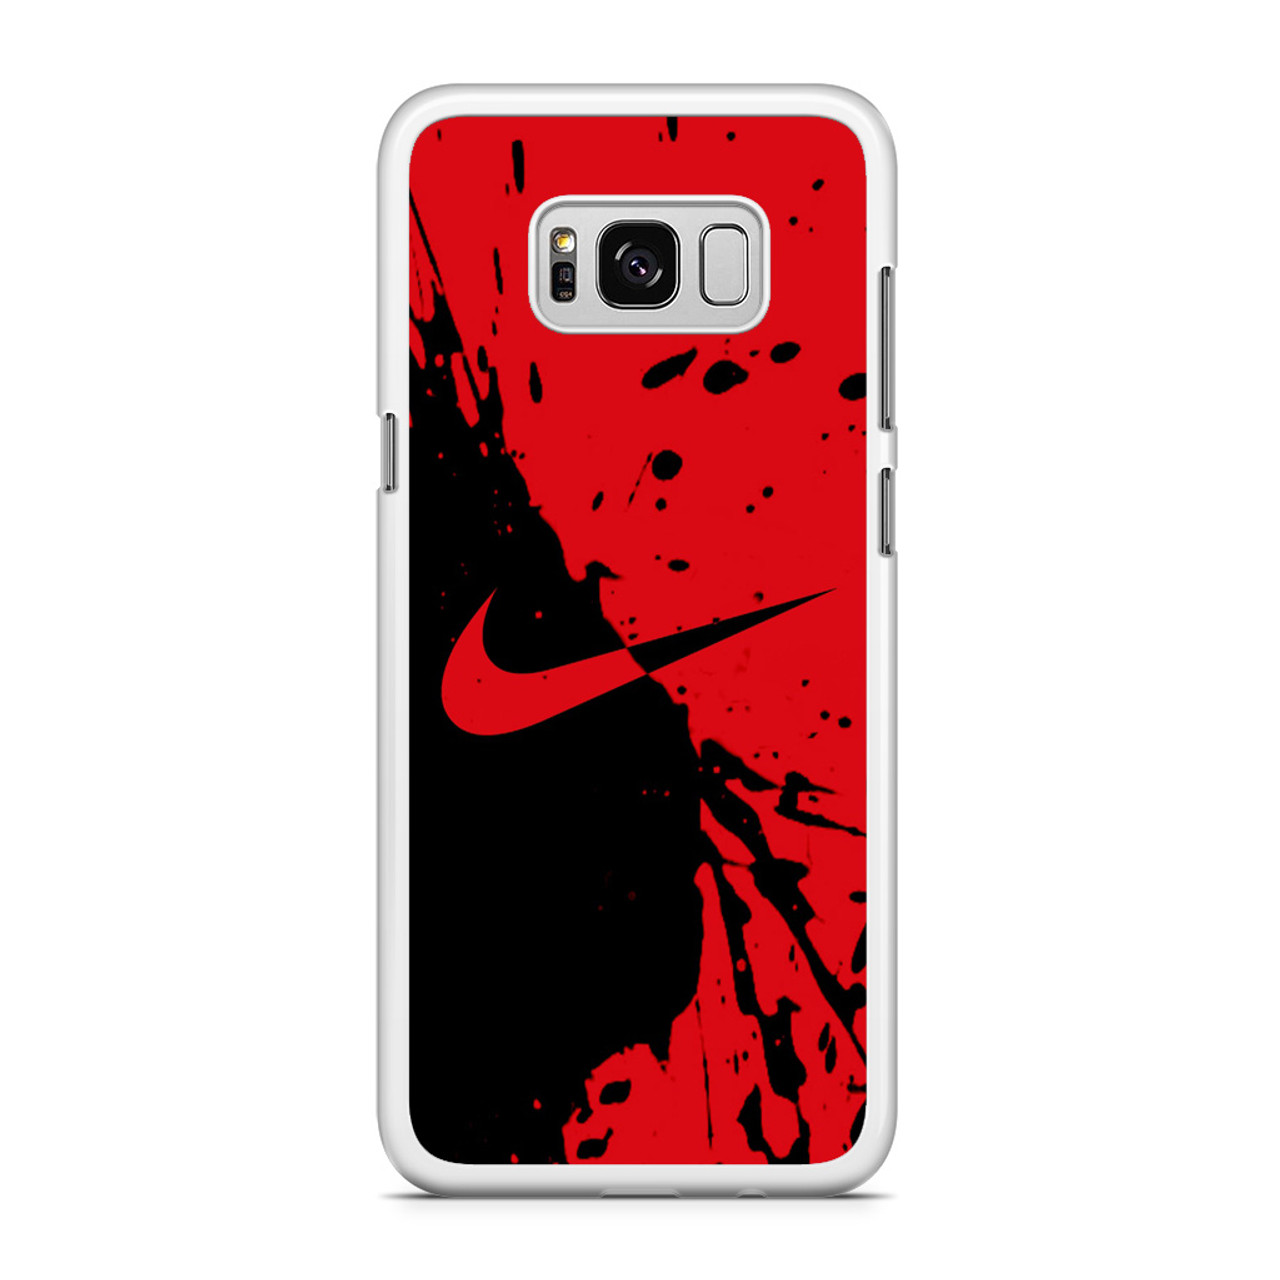 Fraude Het begin Overtreding Nike Red and Black Samsung Galaxy S8 Case - CASESHUNTER